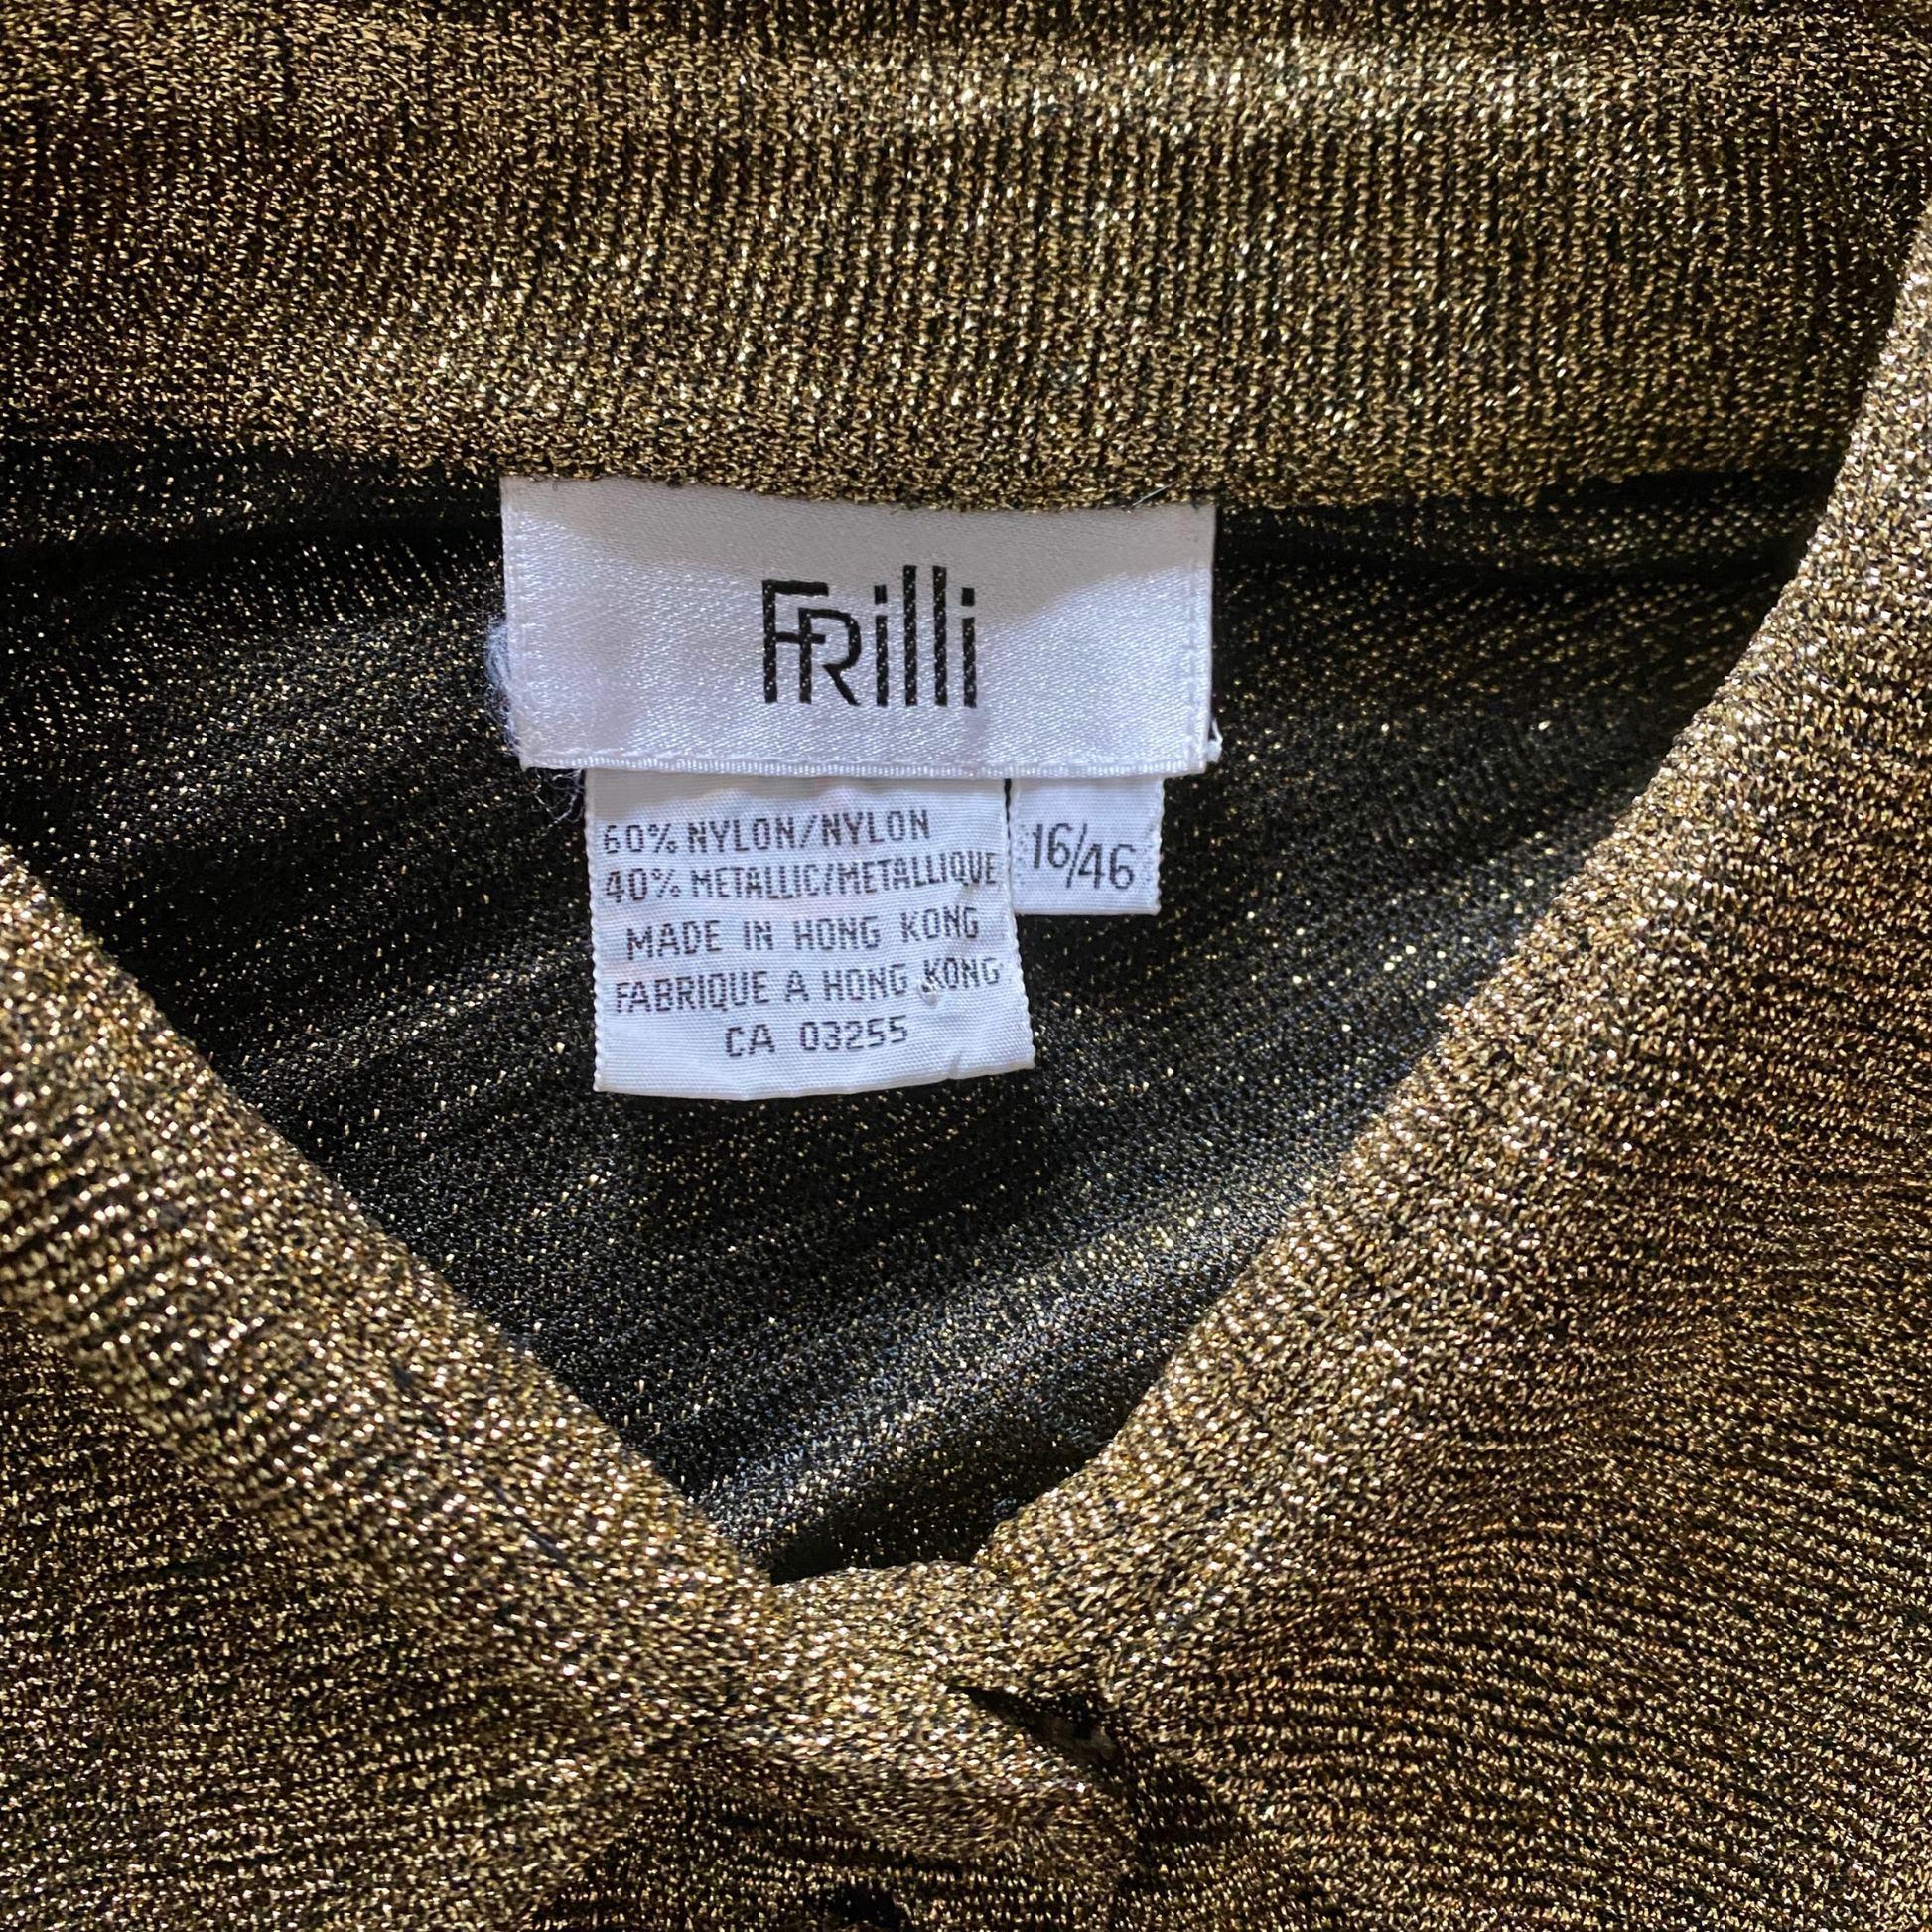 Frilli label. Made in Hong Kong 